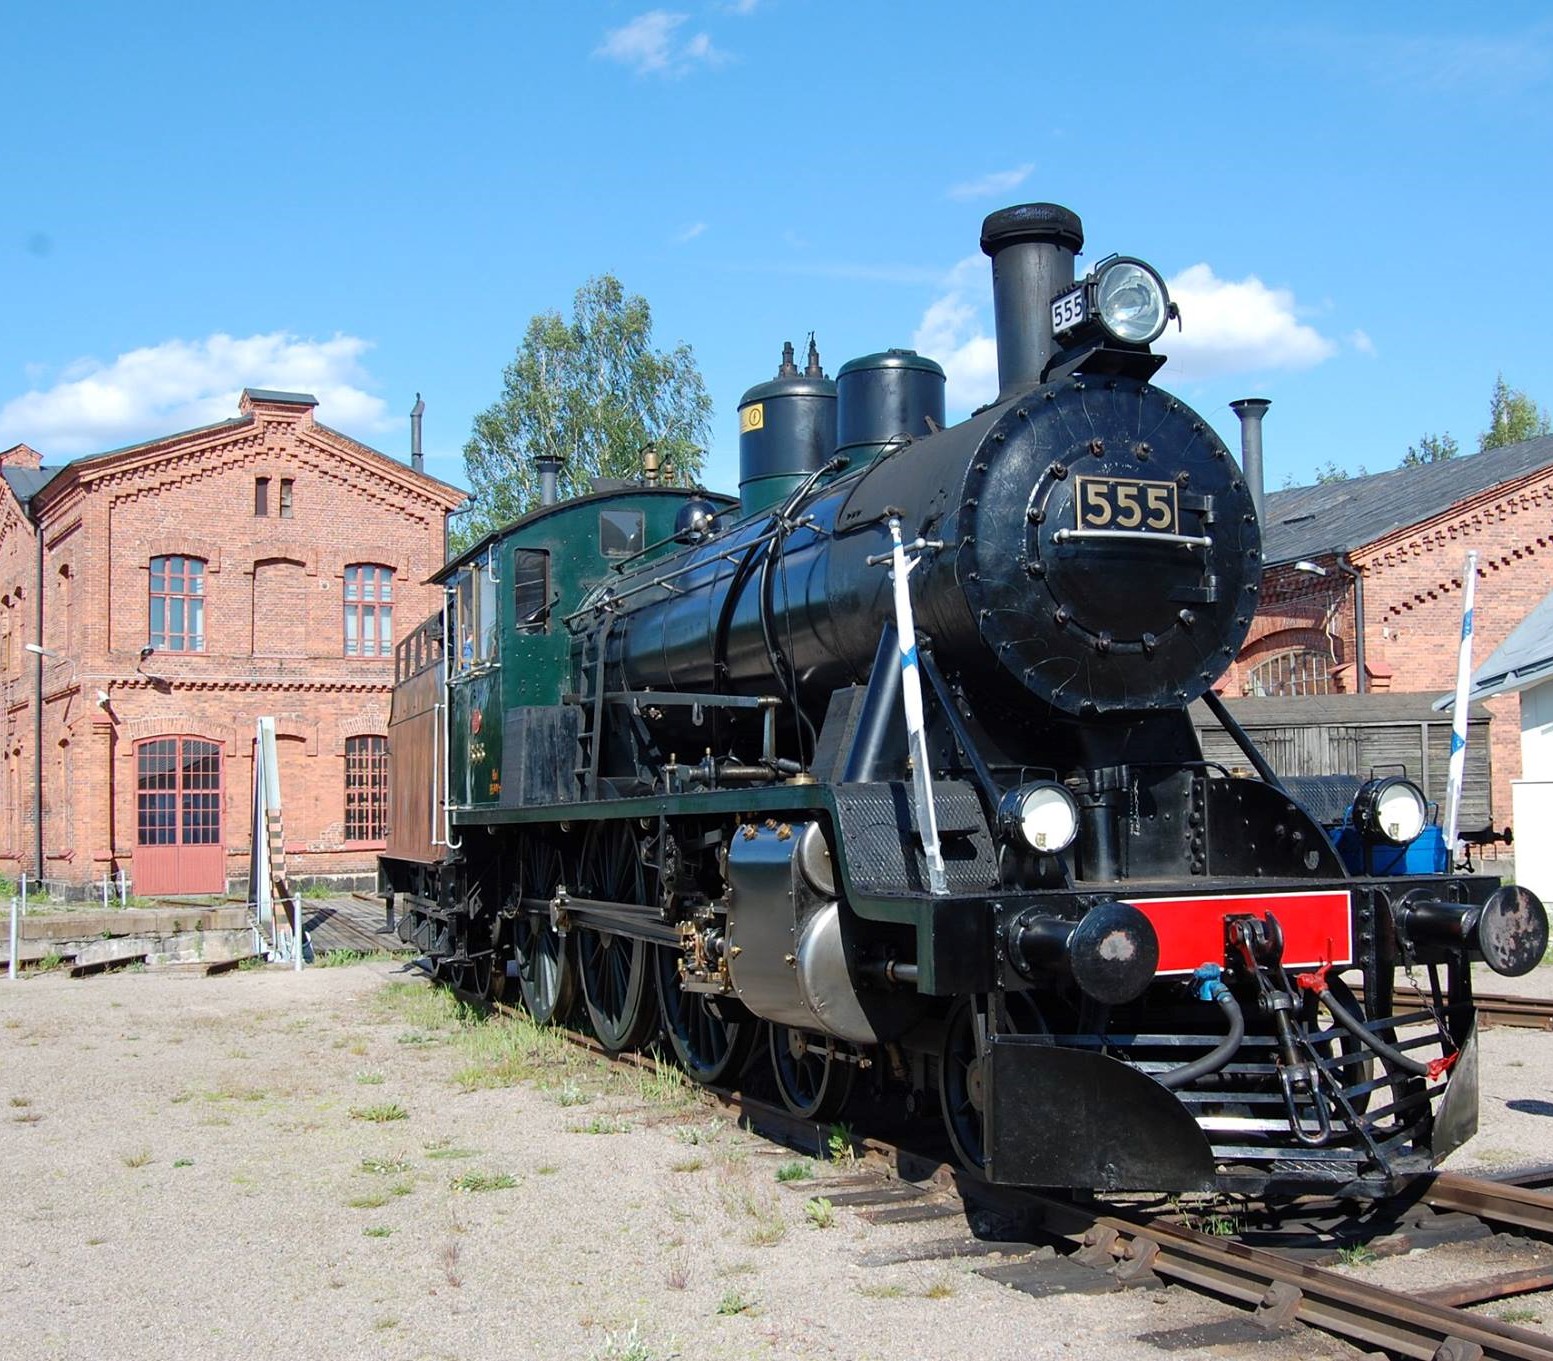 Finnish Railway Museum